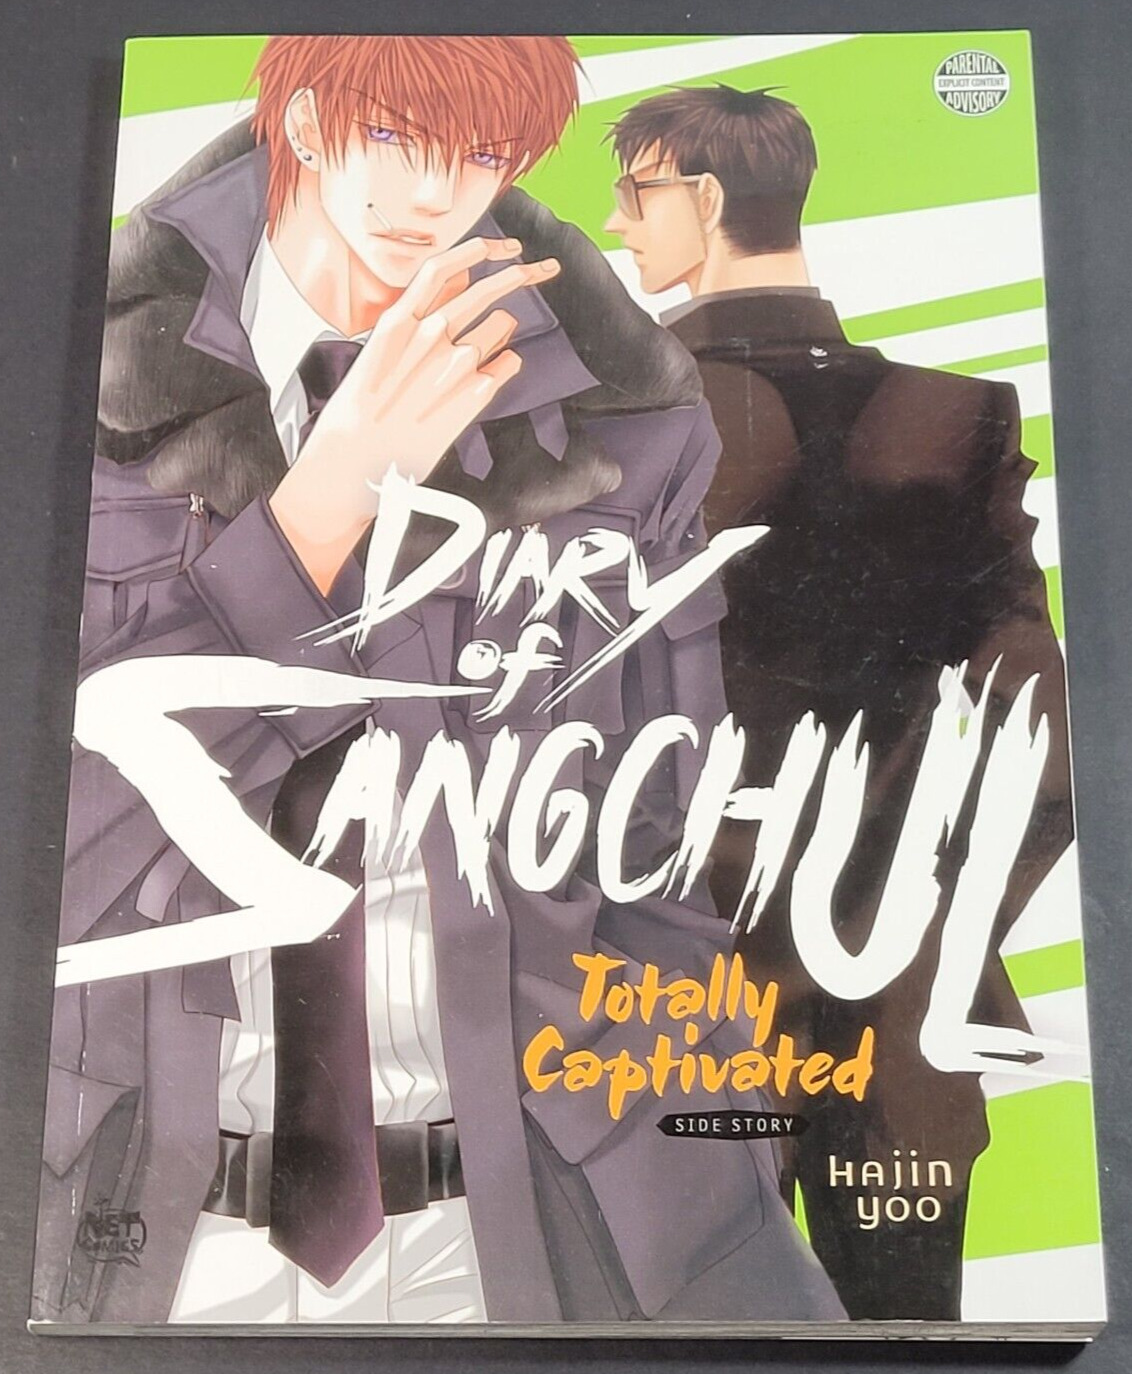 Manga - Totally Captivated Side Story- Diary of Sangchul -  Ex BL Yaoi Hajin Yuu